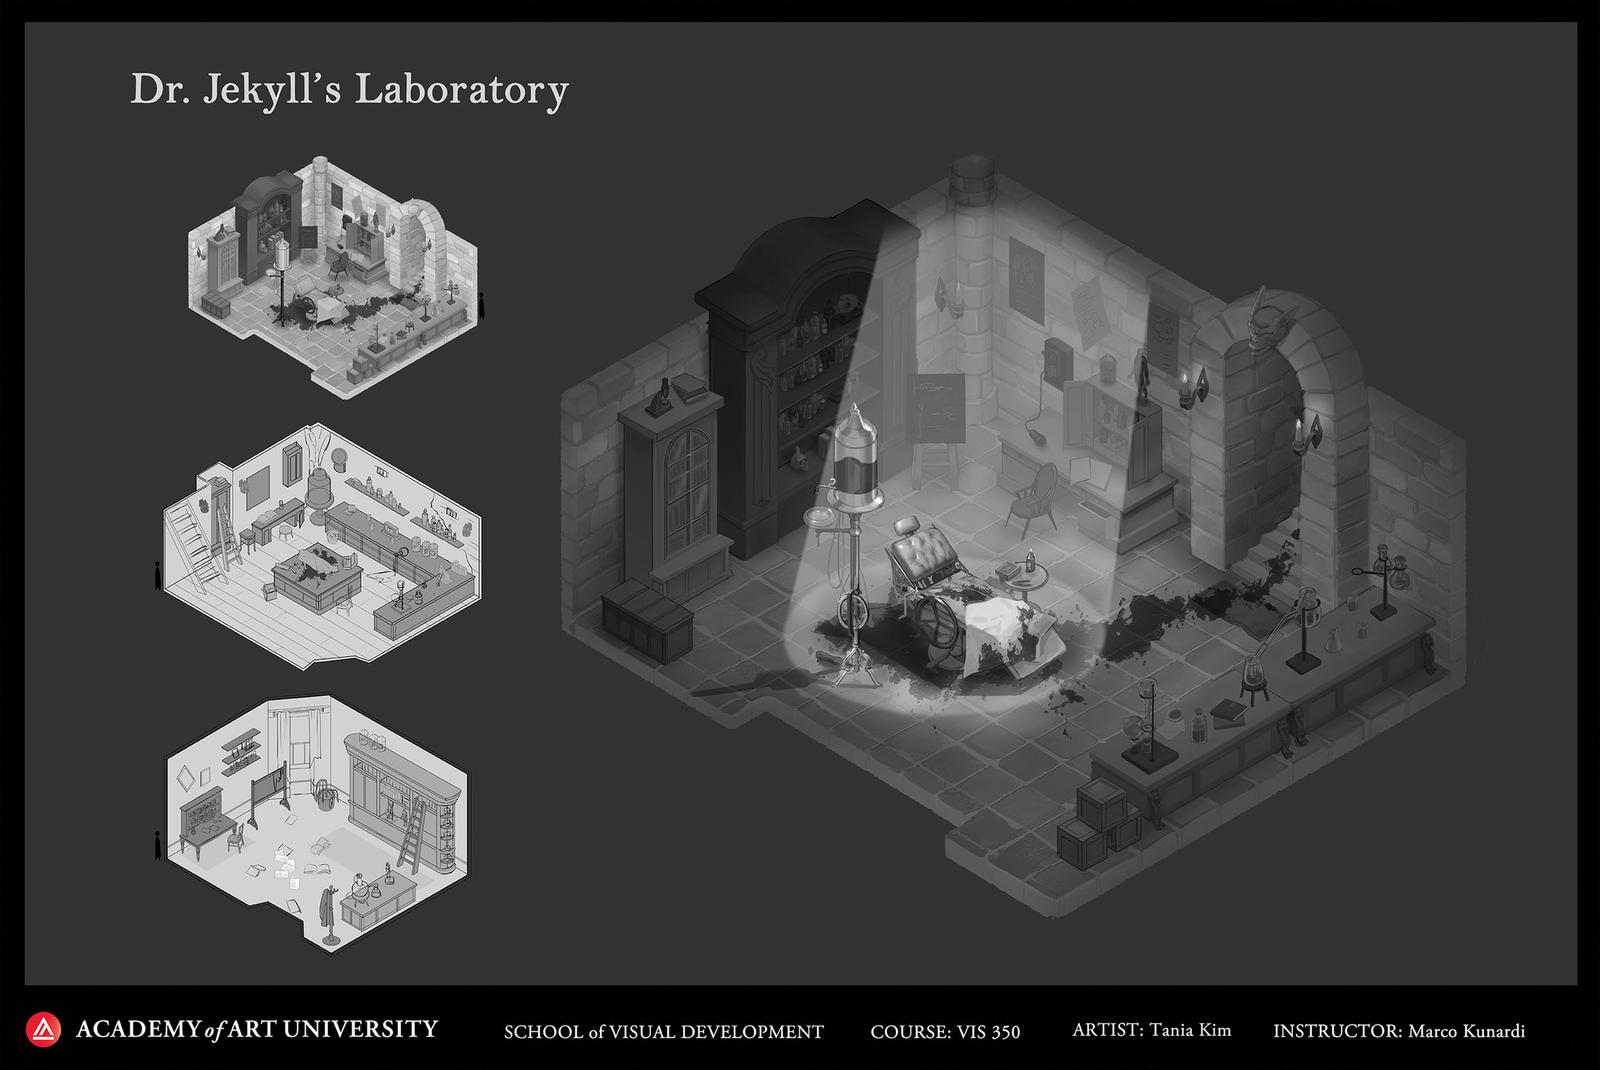 Dr. Jekyll's Laboratory